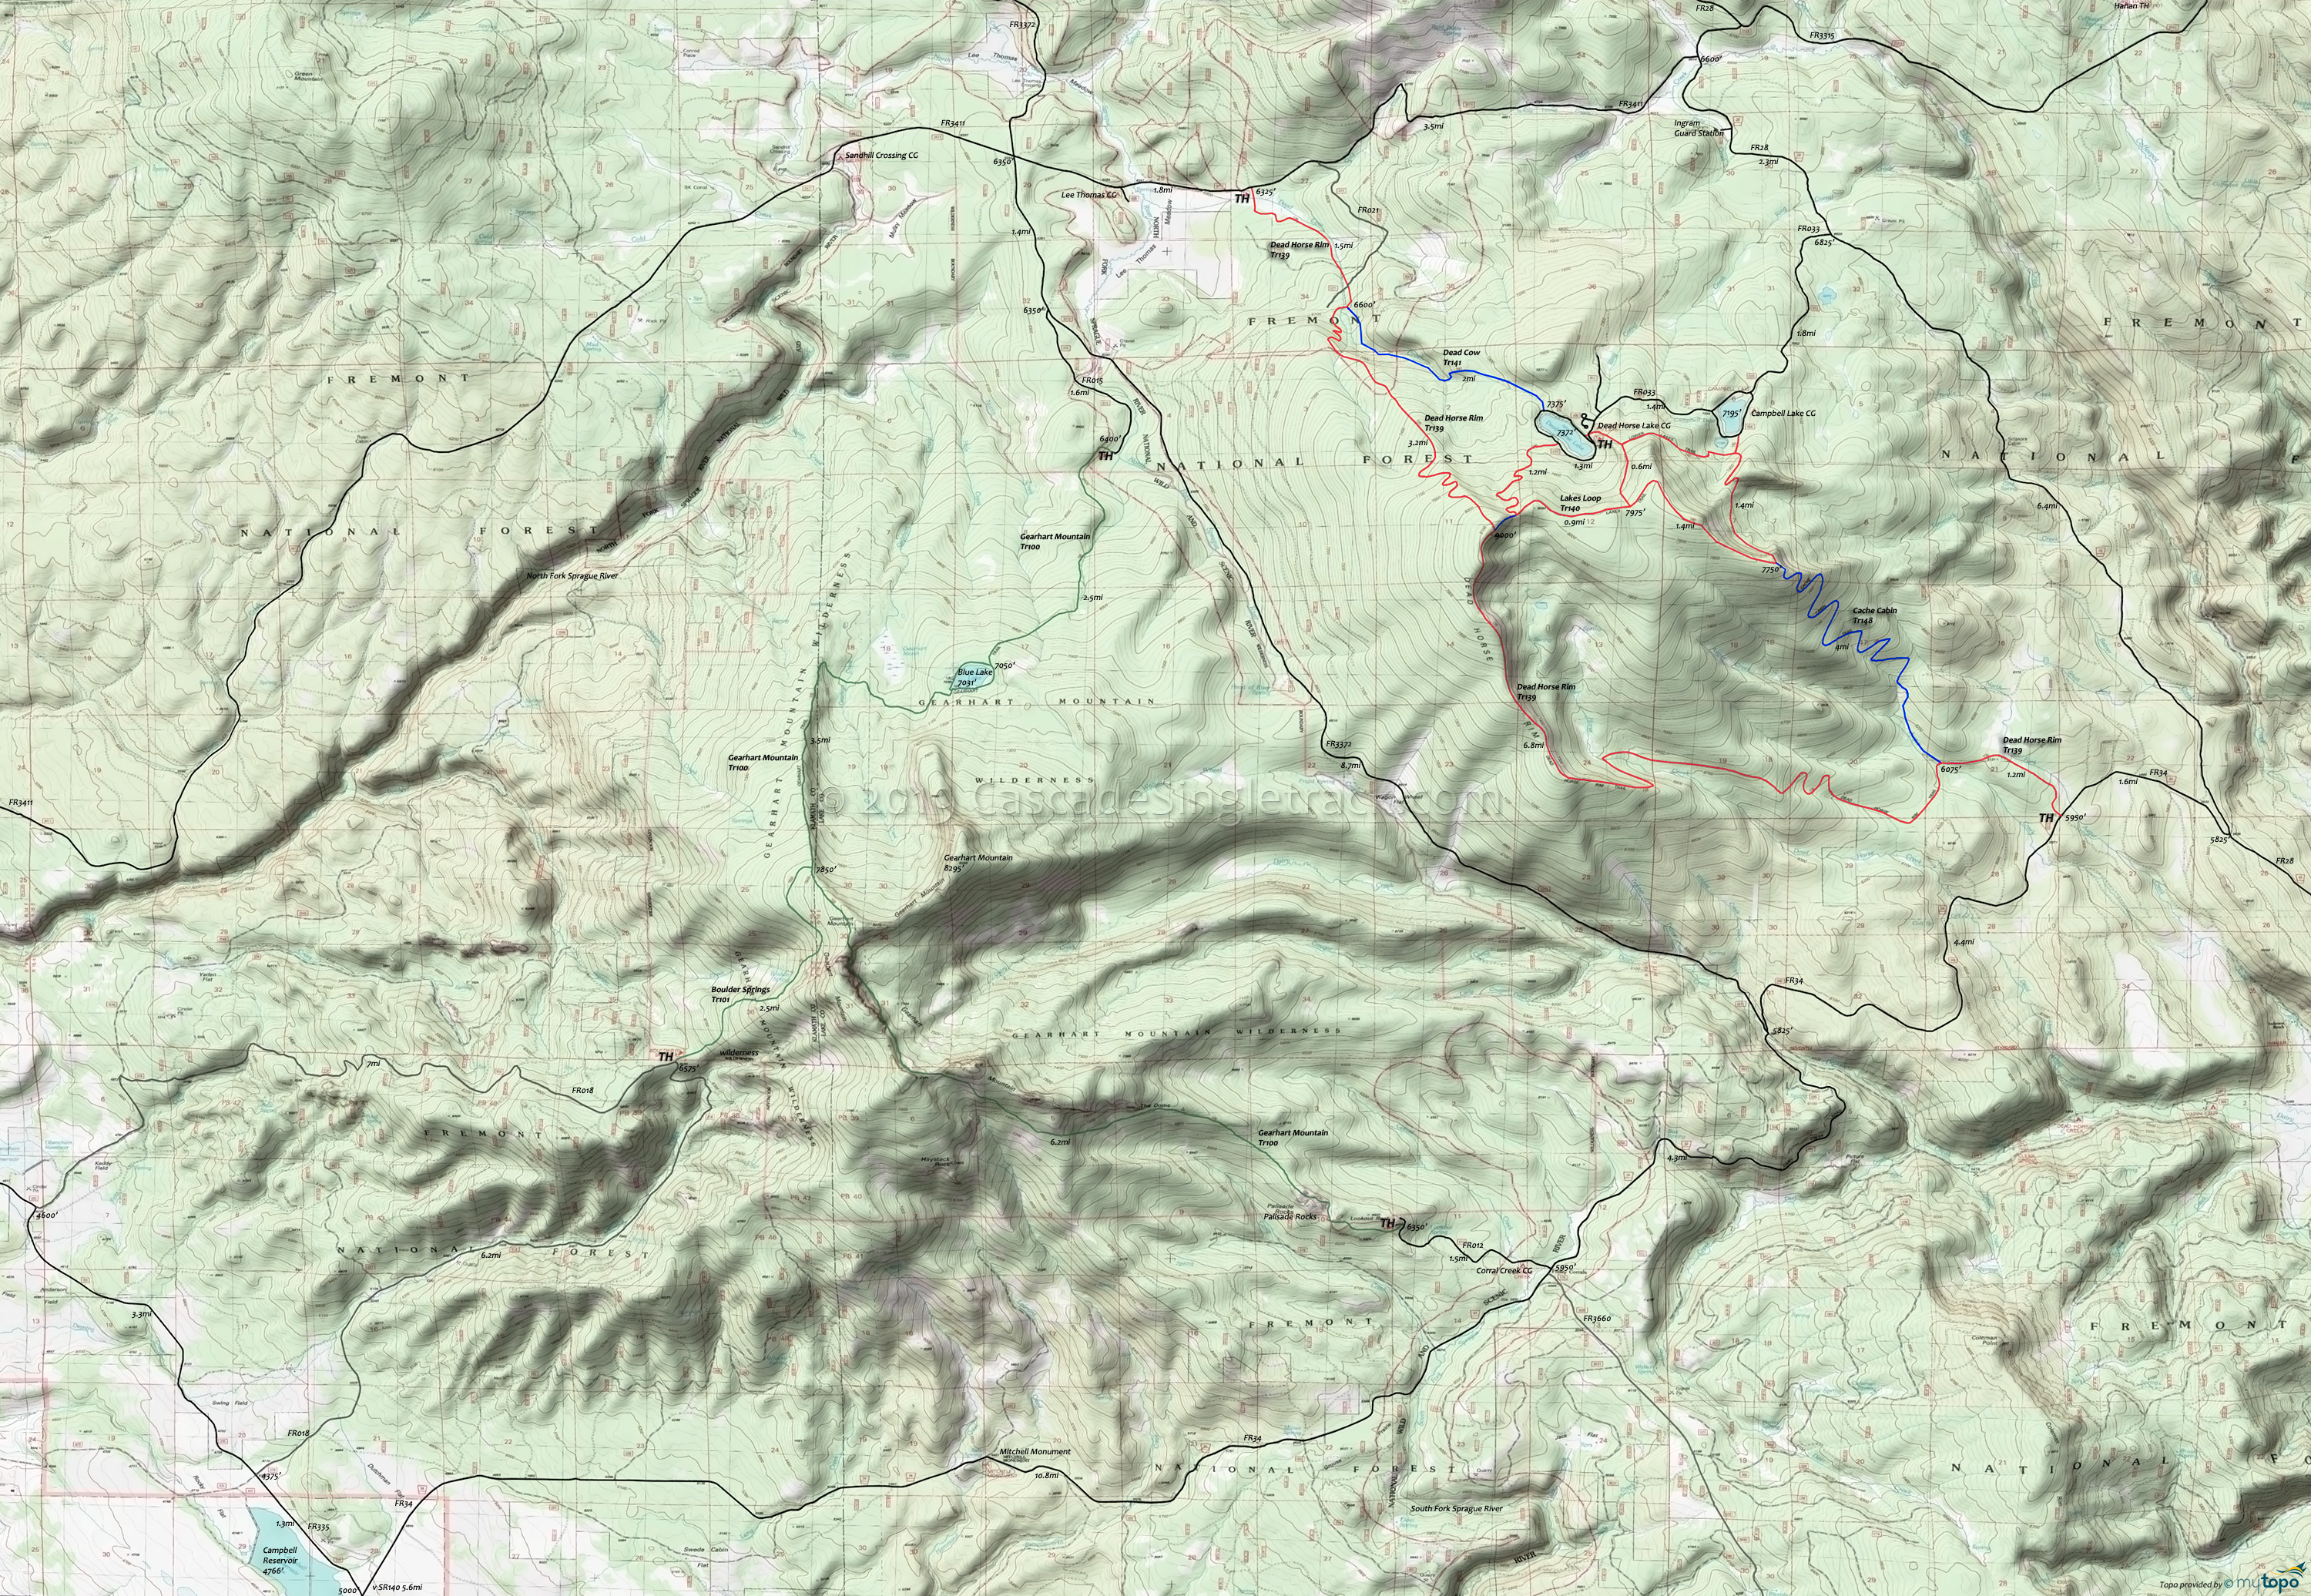  Campbell Lake, Dead Horse Rim Area Topo Map